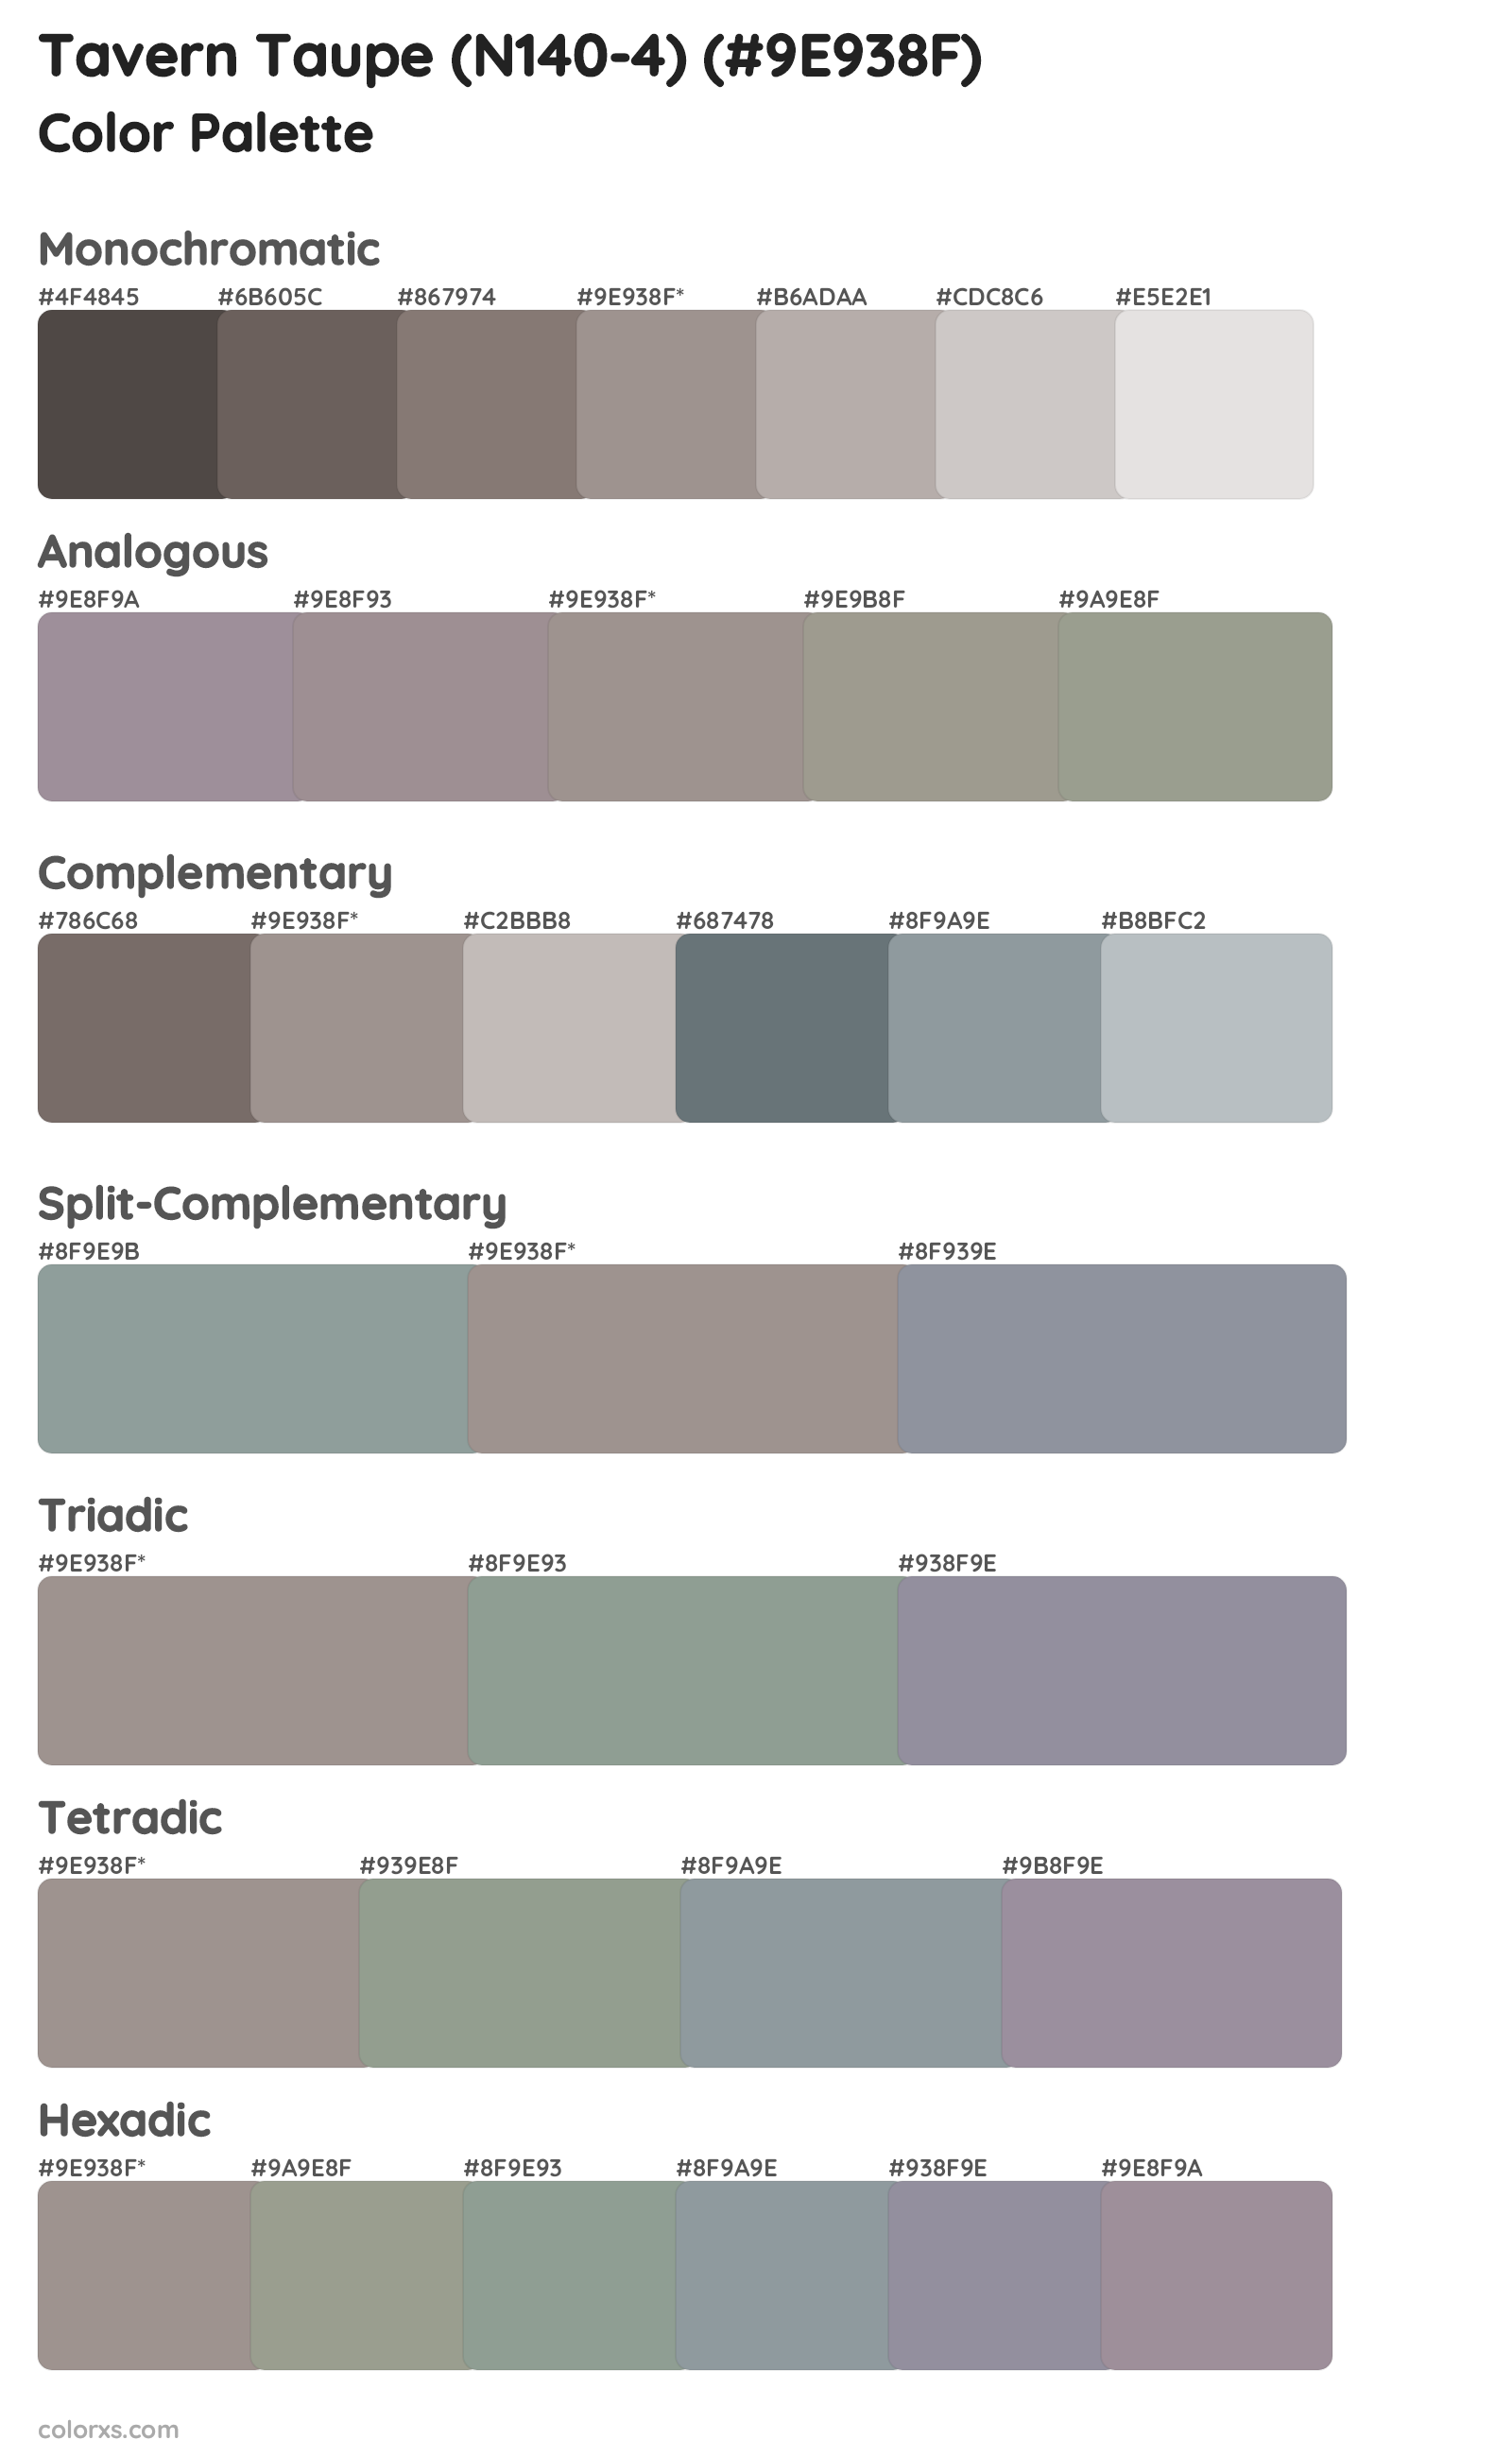 Tavern Taupe (N140-4) Color Scheme Palettes